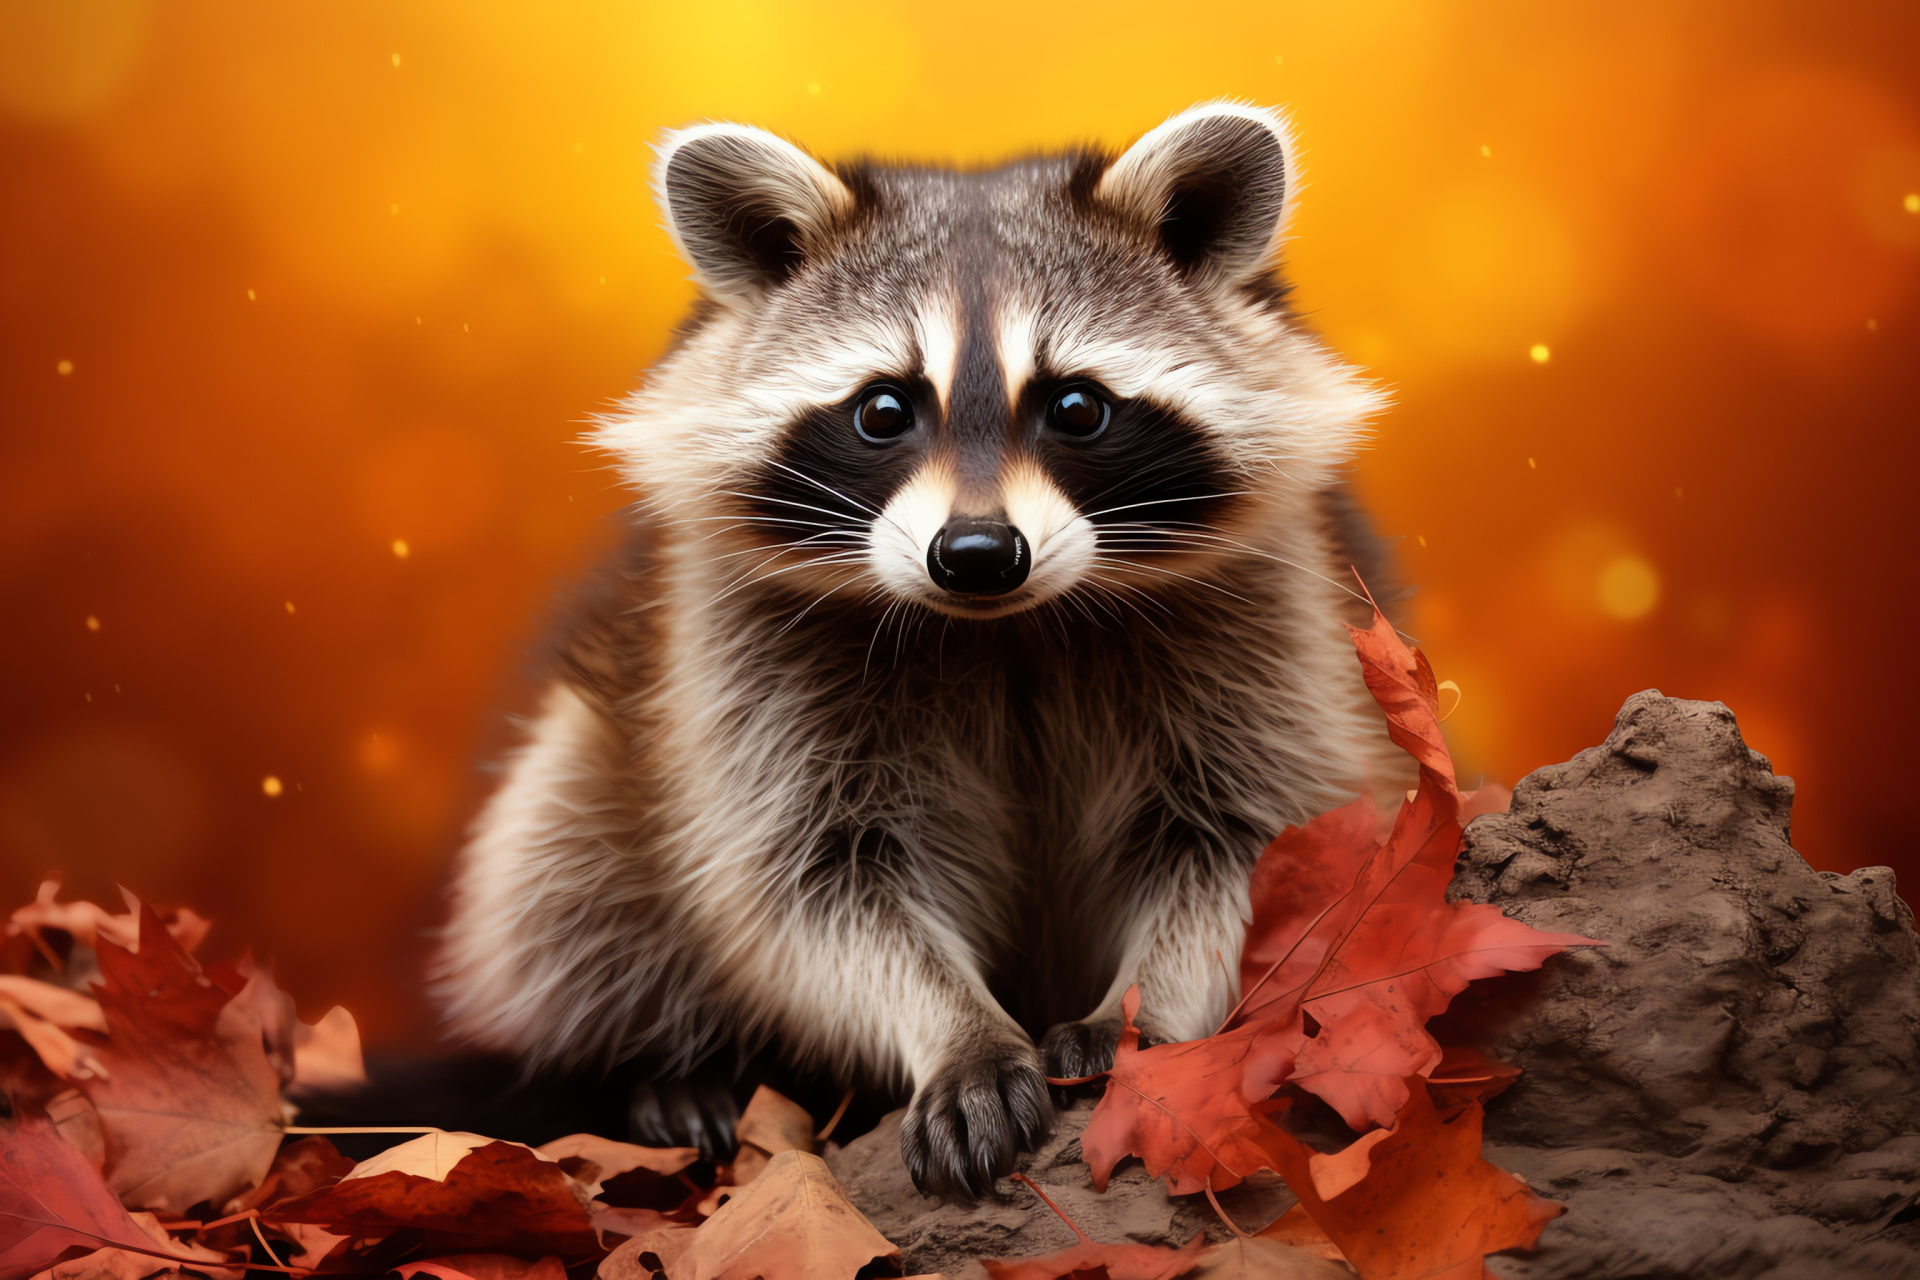 Raccoon resting, striped tail, mammal wildlife, serene animal, natural beauty, HD Desktop Wallpaper